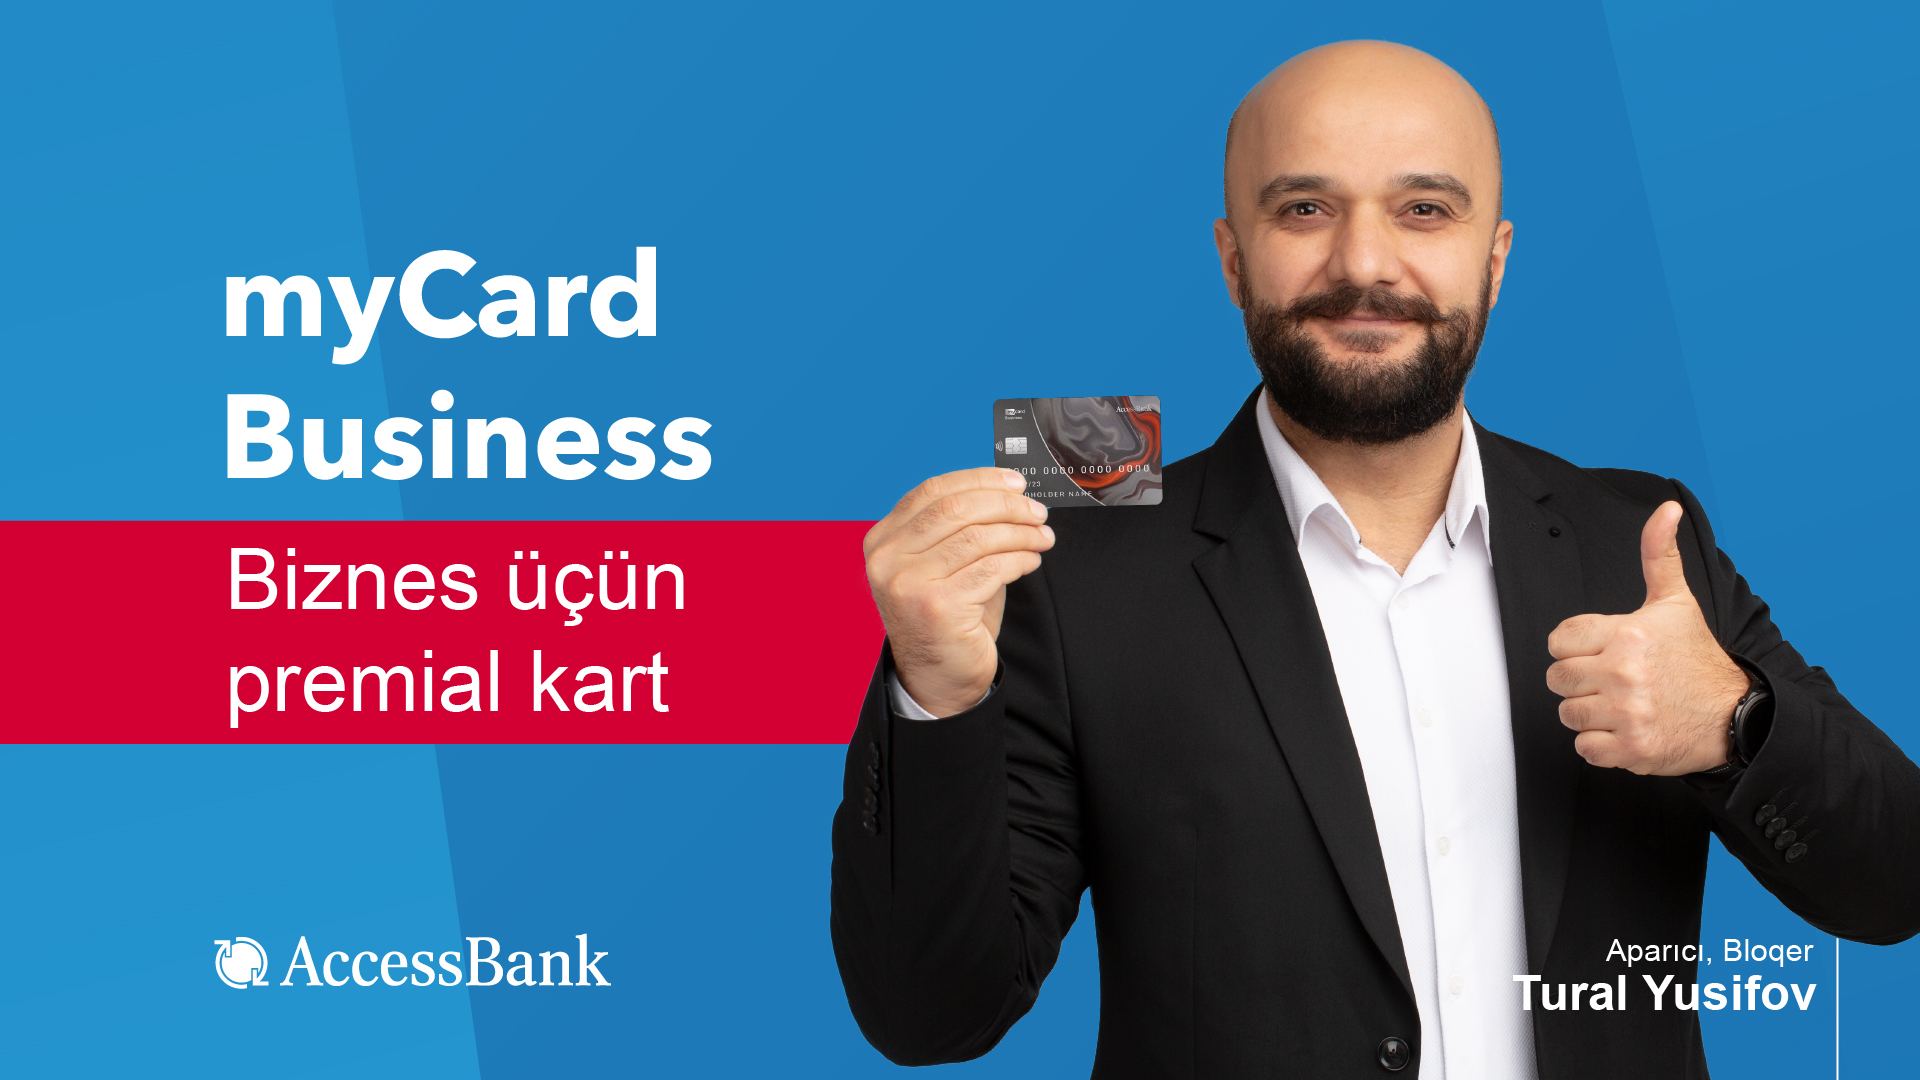 AccessBank представляет новую дебетовую карту myCard Business